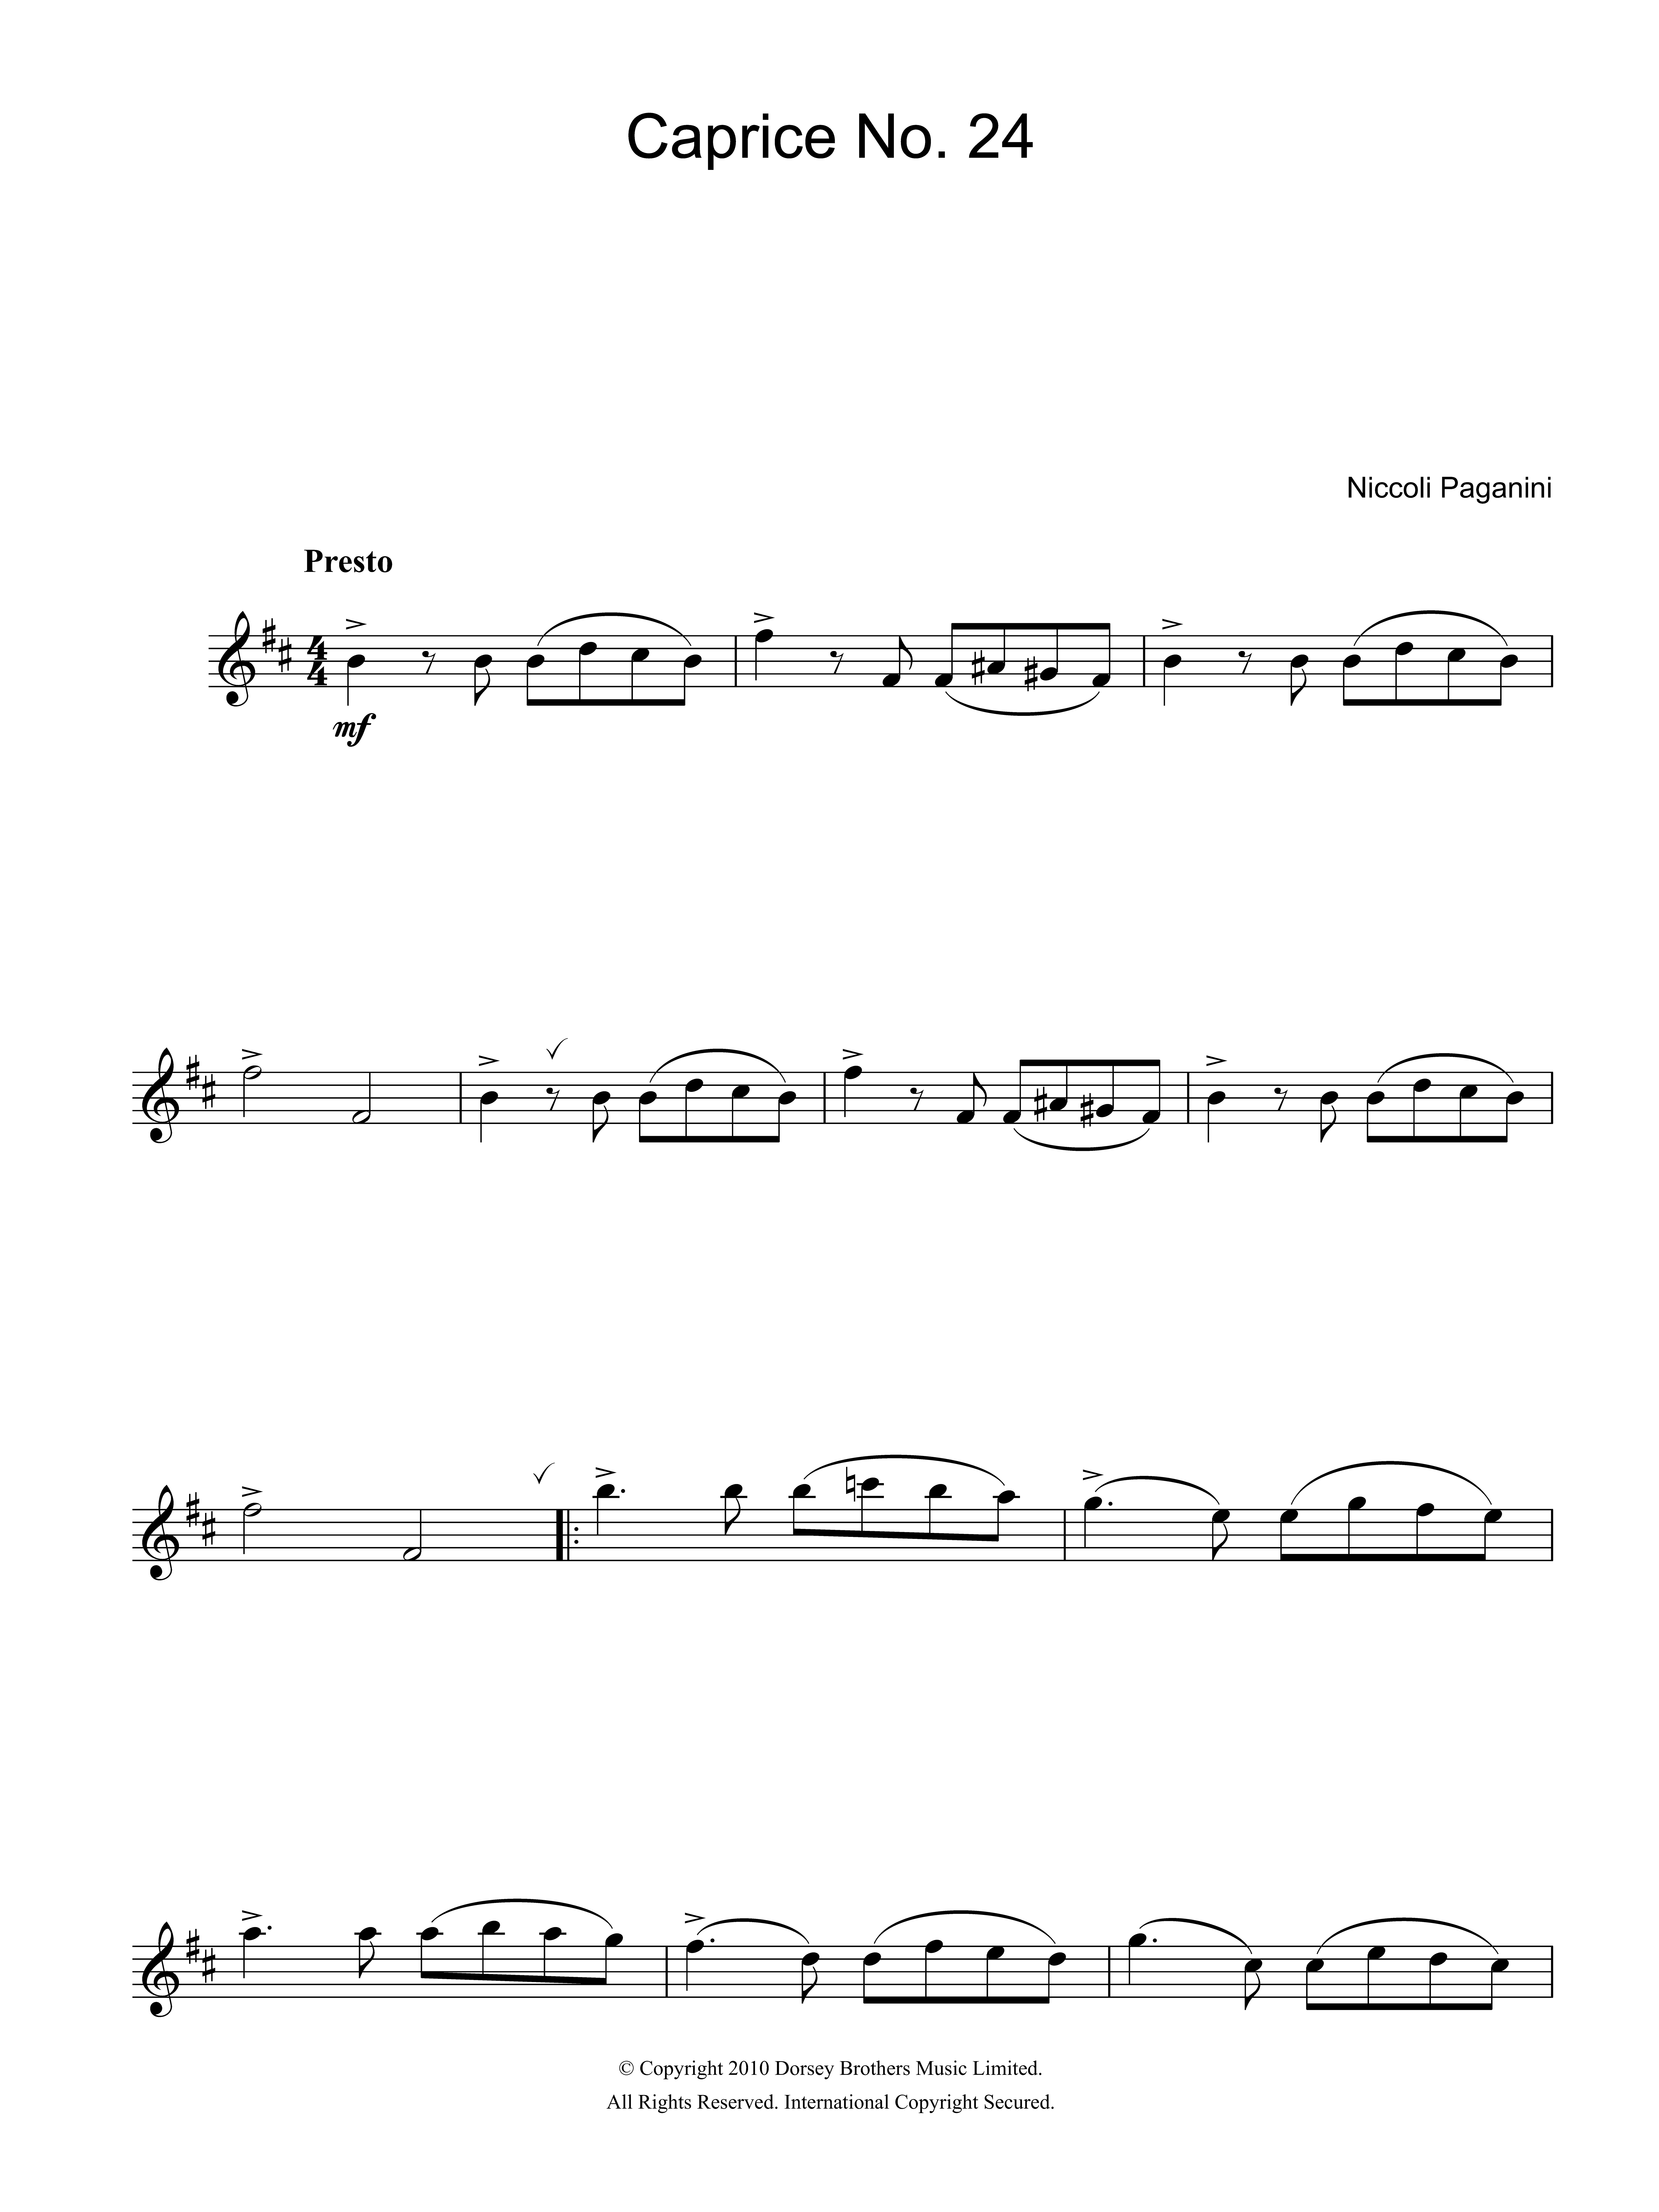 Niccolo Paganini Caprice No. 21 Sheet Music Notes & Chords for Alto Saxophone - Download or Print PDF